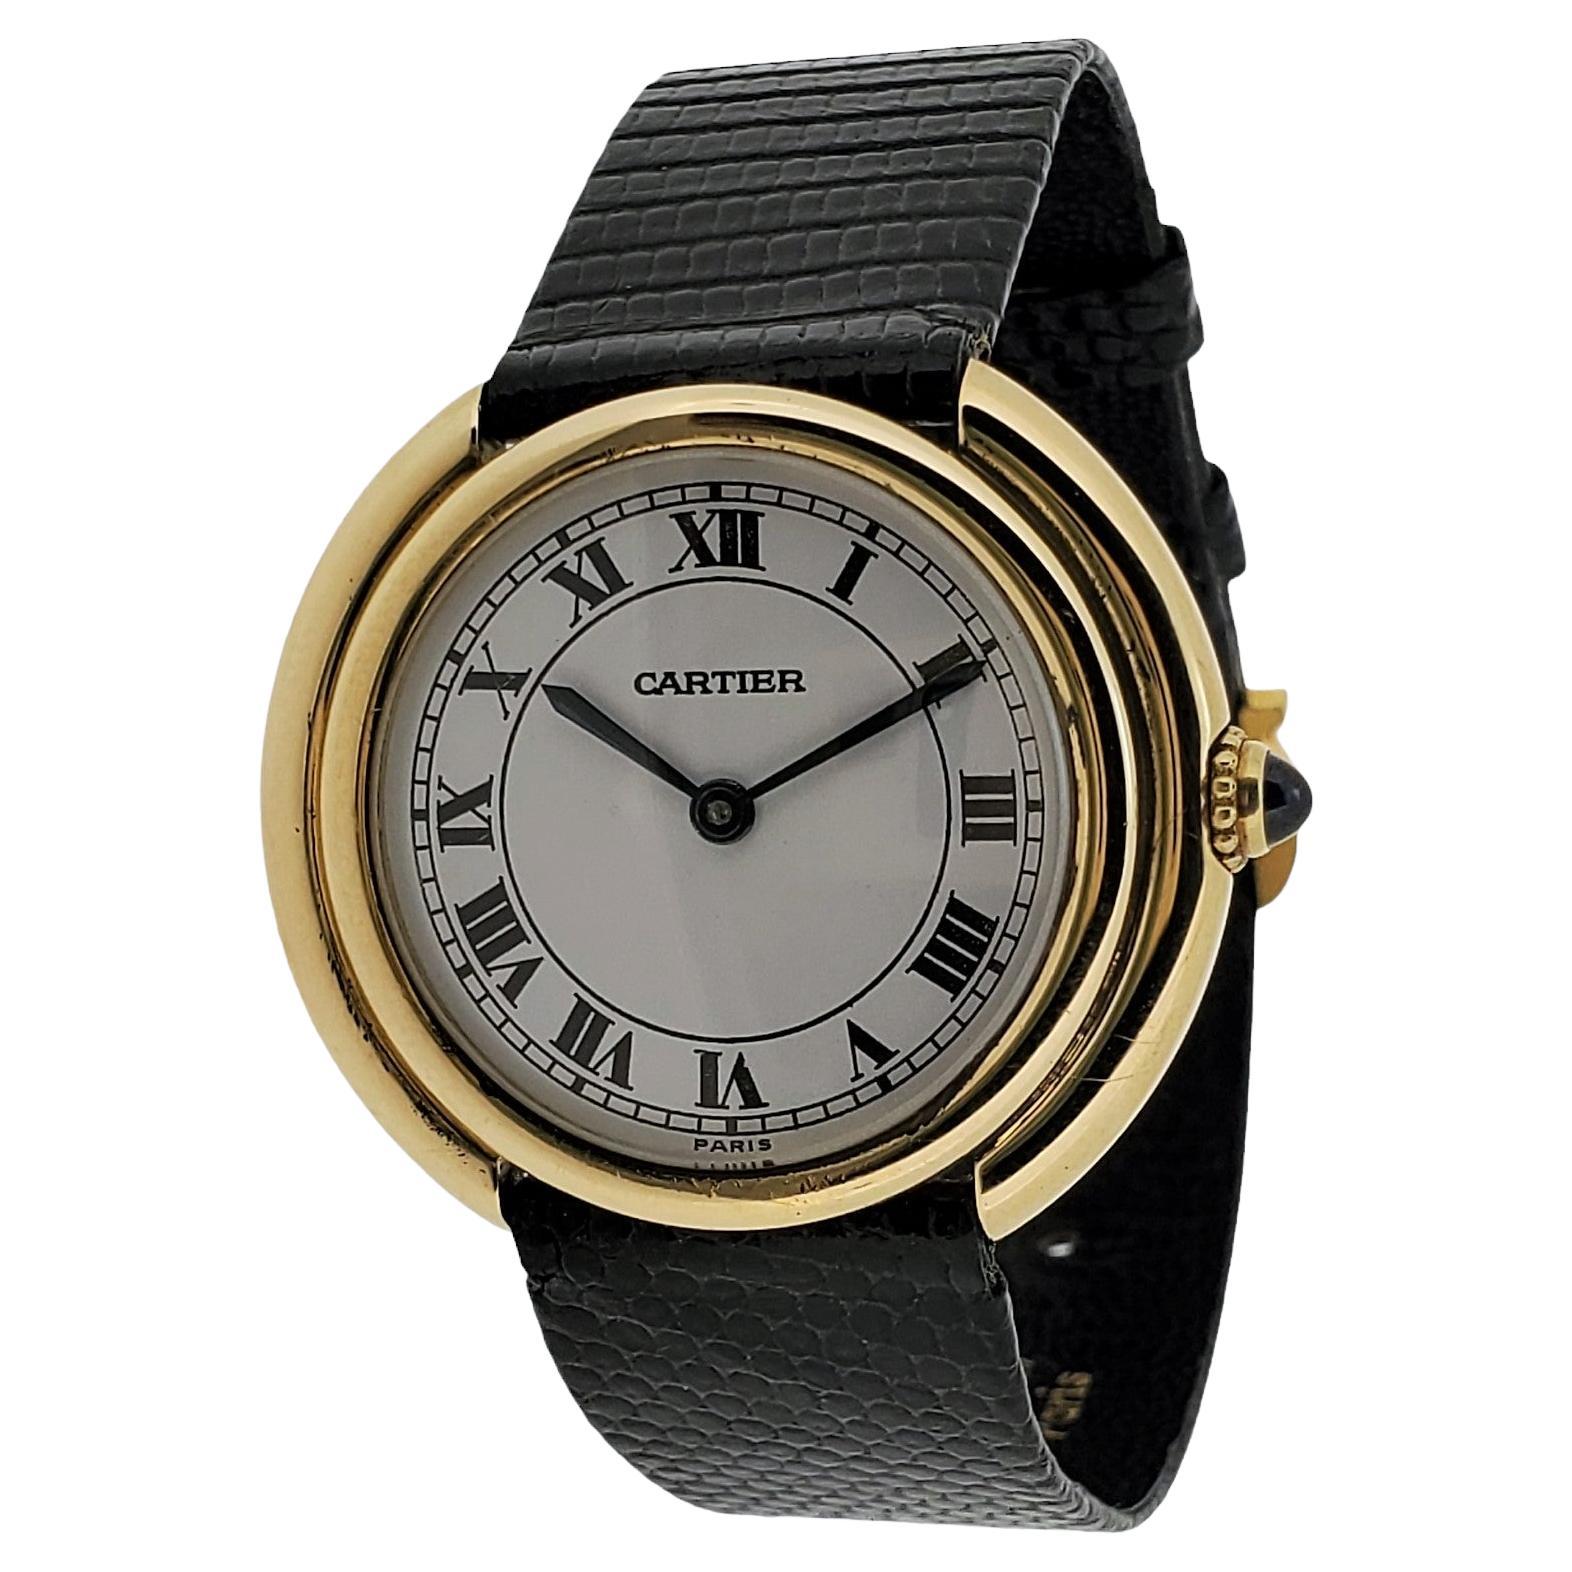 Cartier Paris Vendome Large Automatic Watch with Deployant Buckle, circa 1975